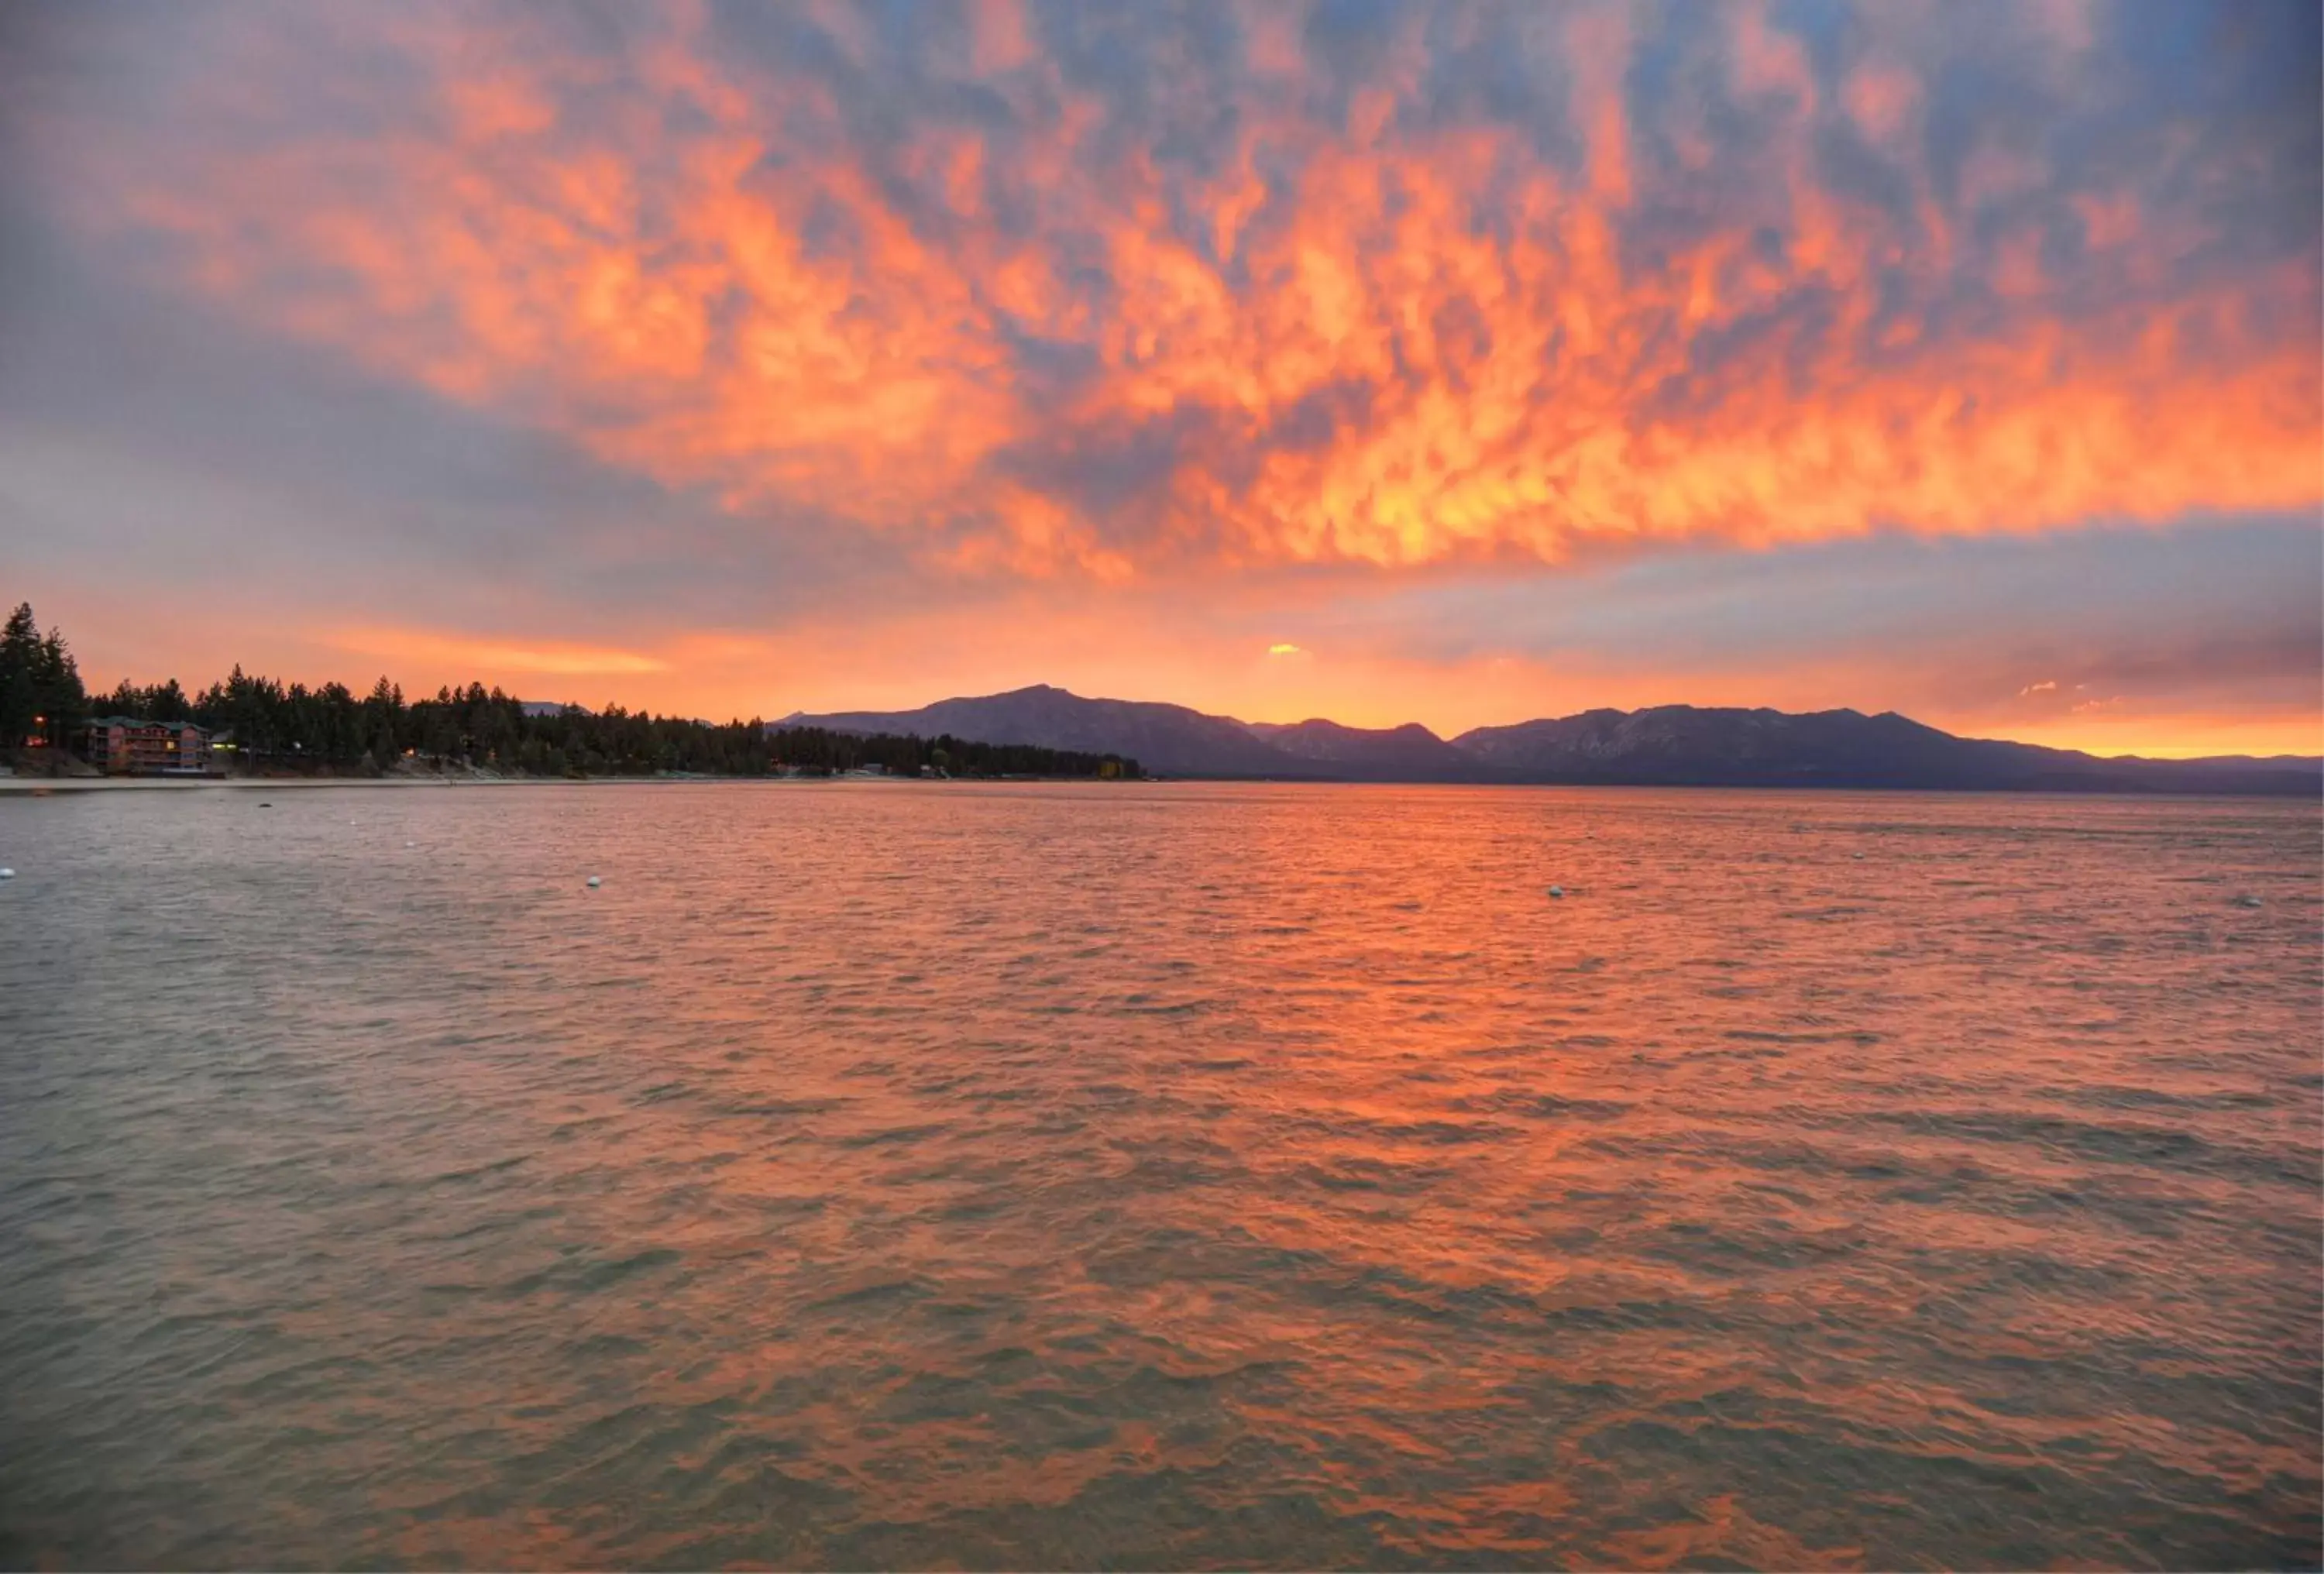 Lake view, Sunrise/Sunset in Beach Retreat & Lodge at Tahoe